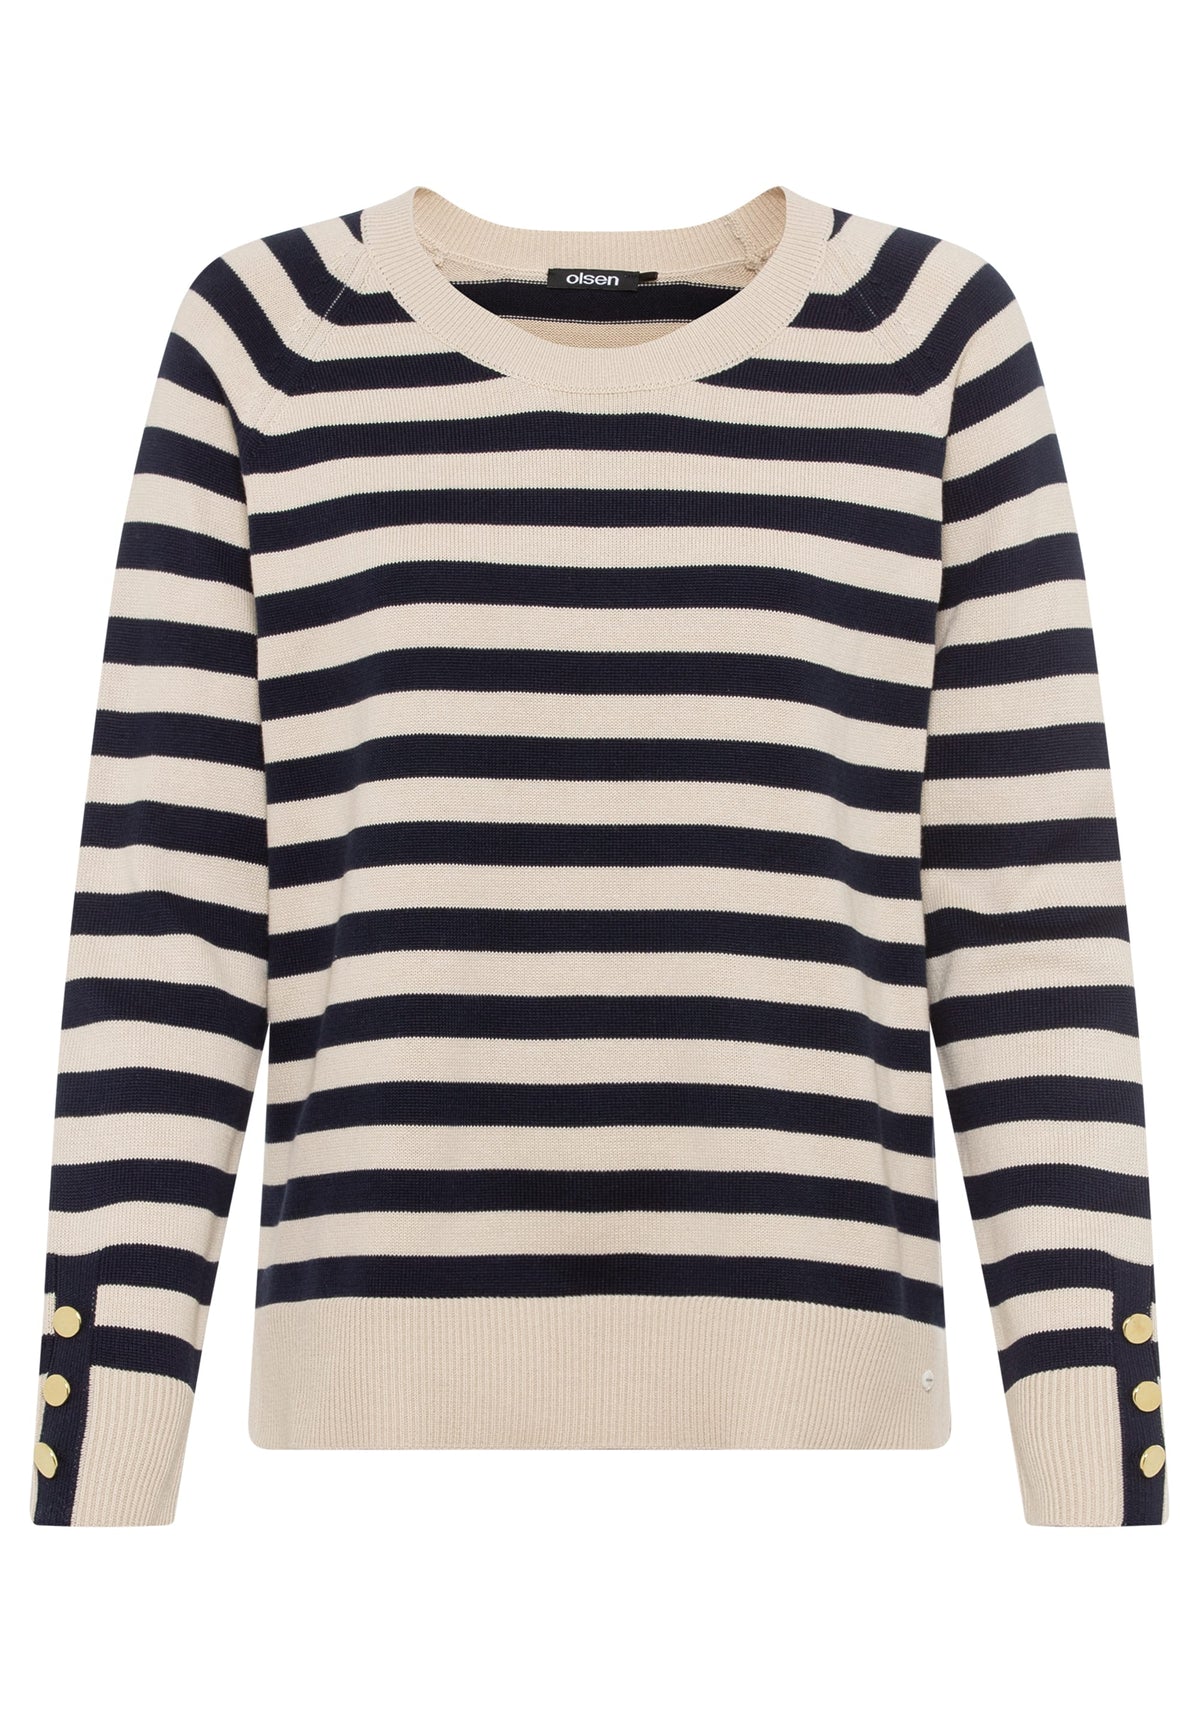 Cotton Blend Long Sleeve Stripe Boat Neck Sweater